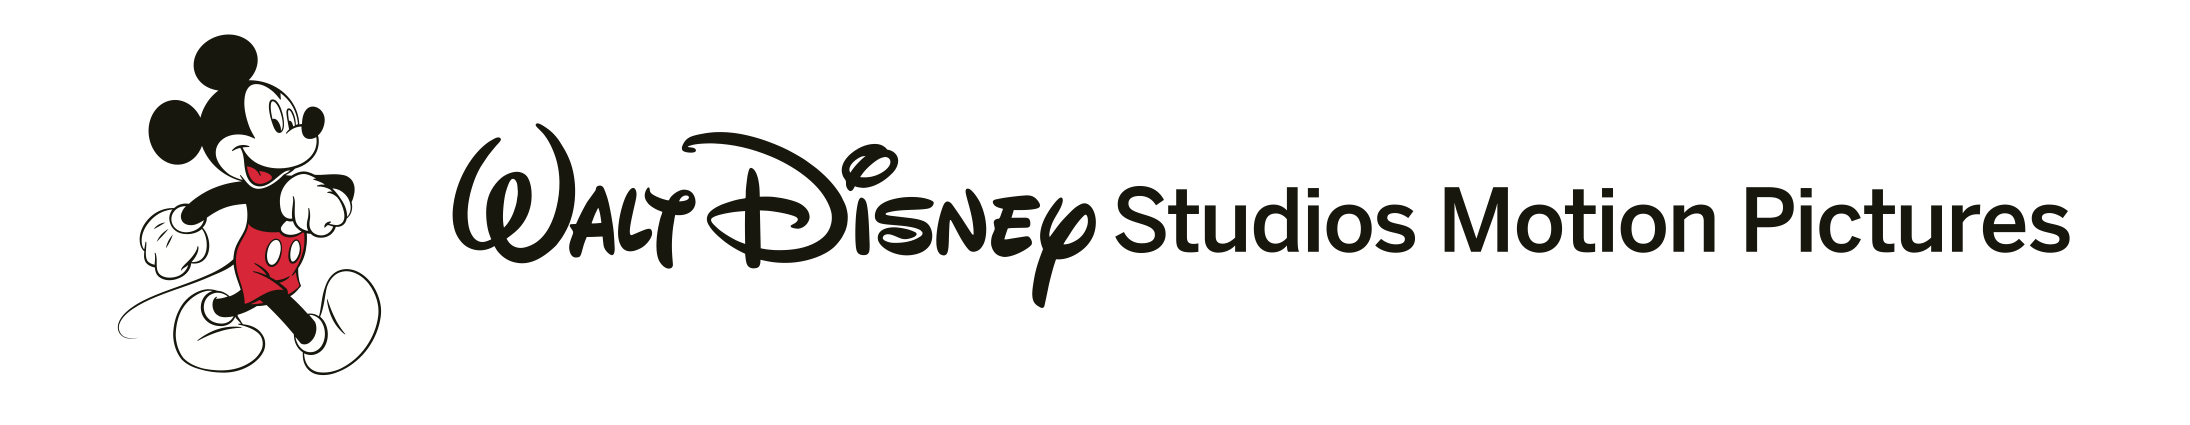 Walt Disney Studios Motion Pictures Logo - The Walt Disney Studios Movies Logo - On the Go in MCO